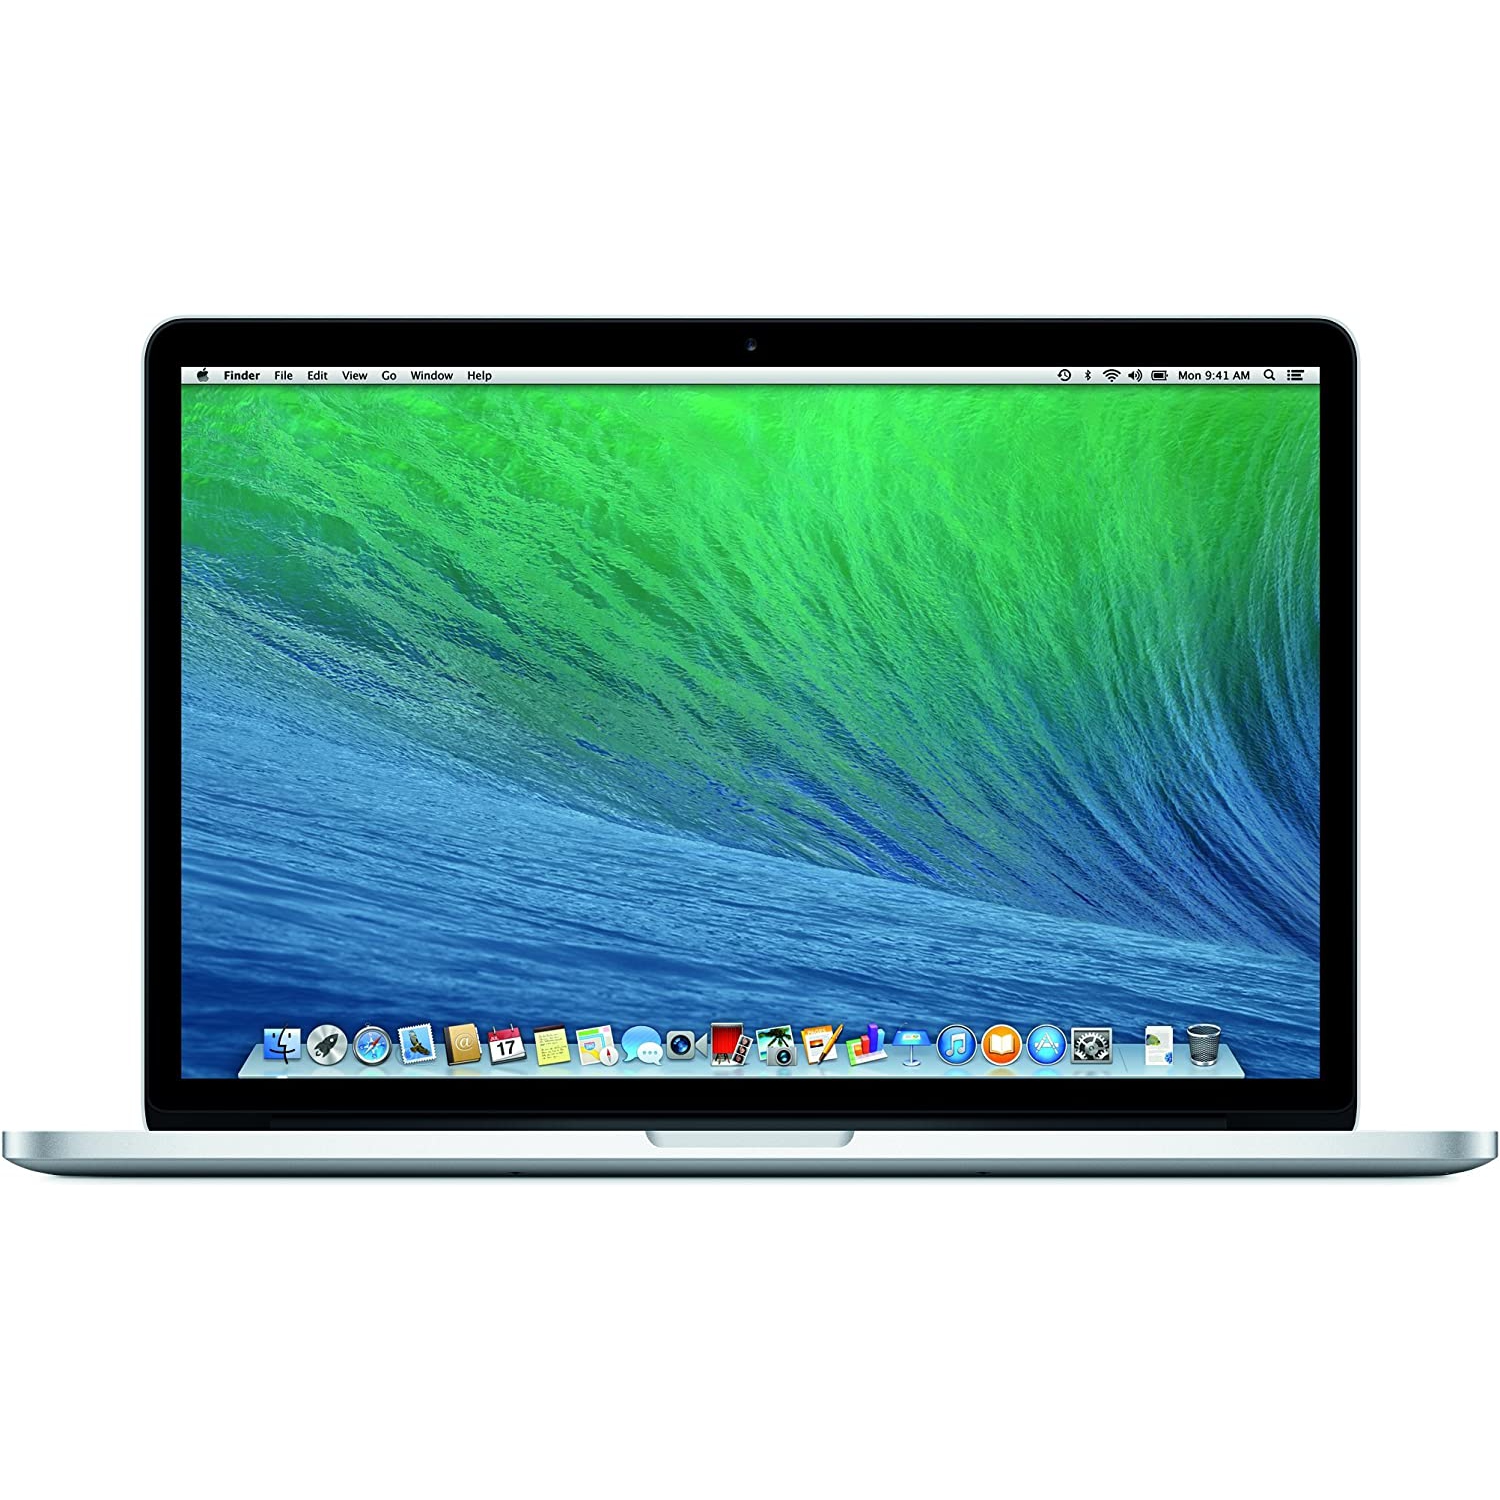 Refurbished (Good) - Apple MacBook Pro 15